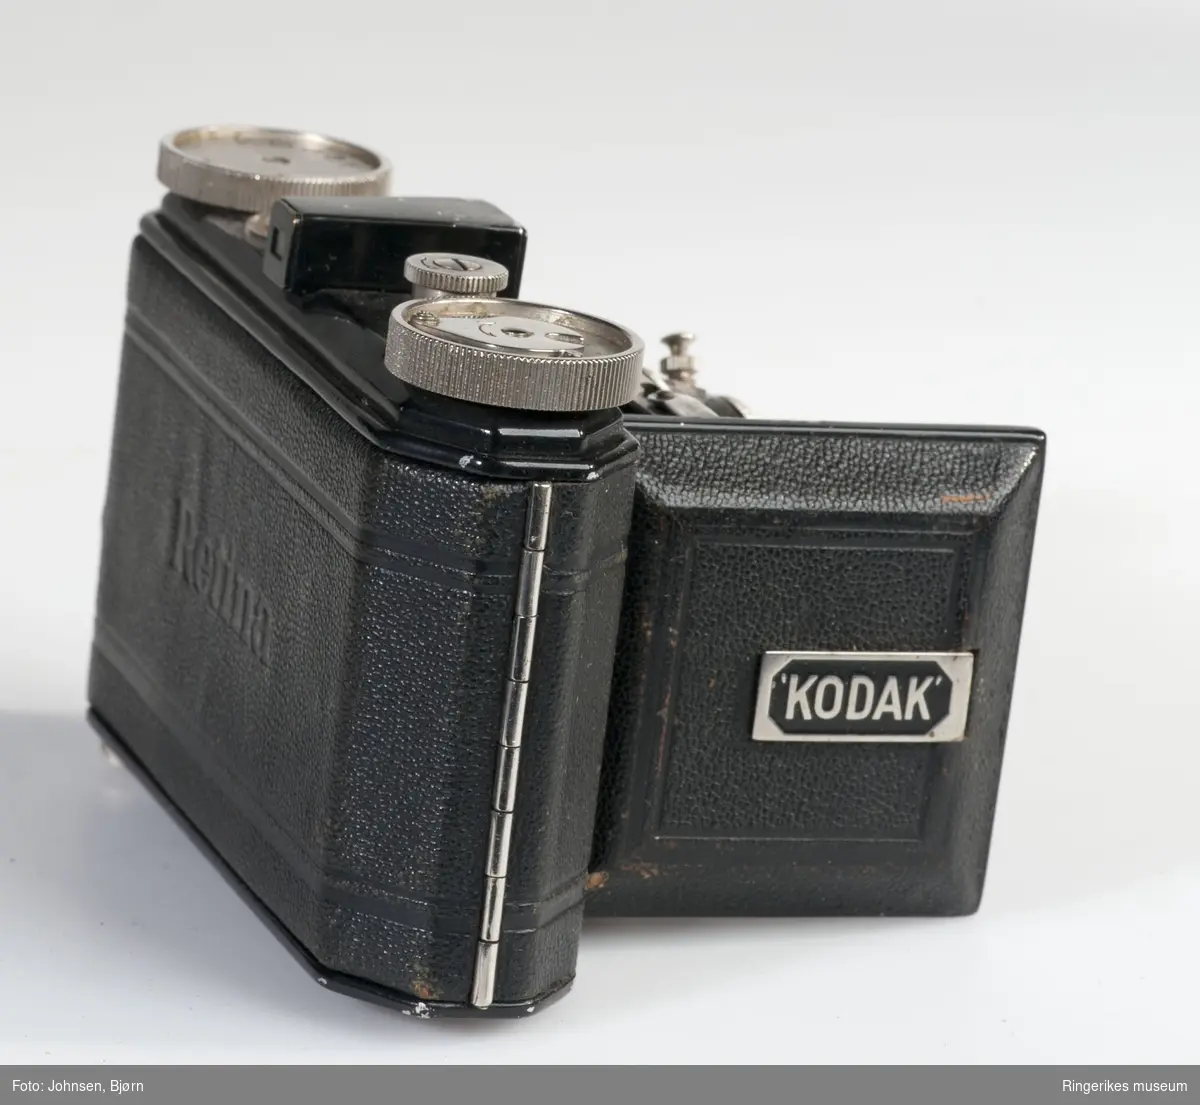 Kodak Retina folding kamera
Compurlukker